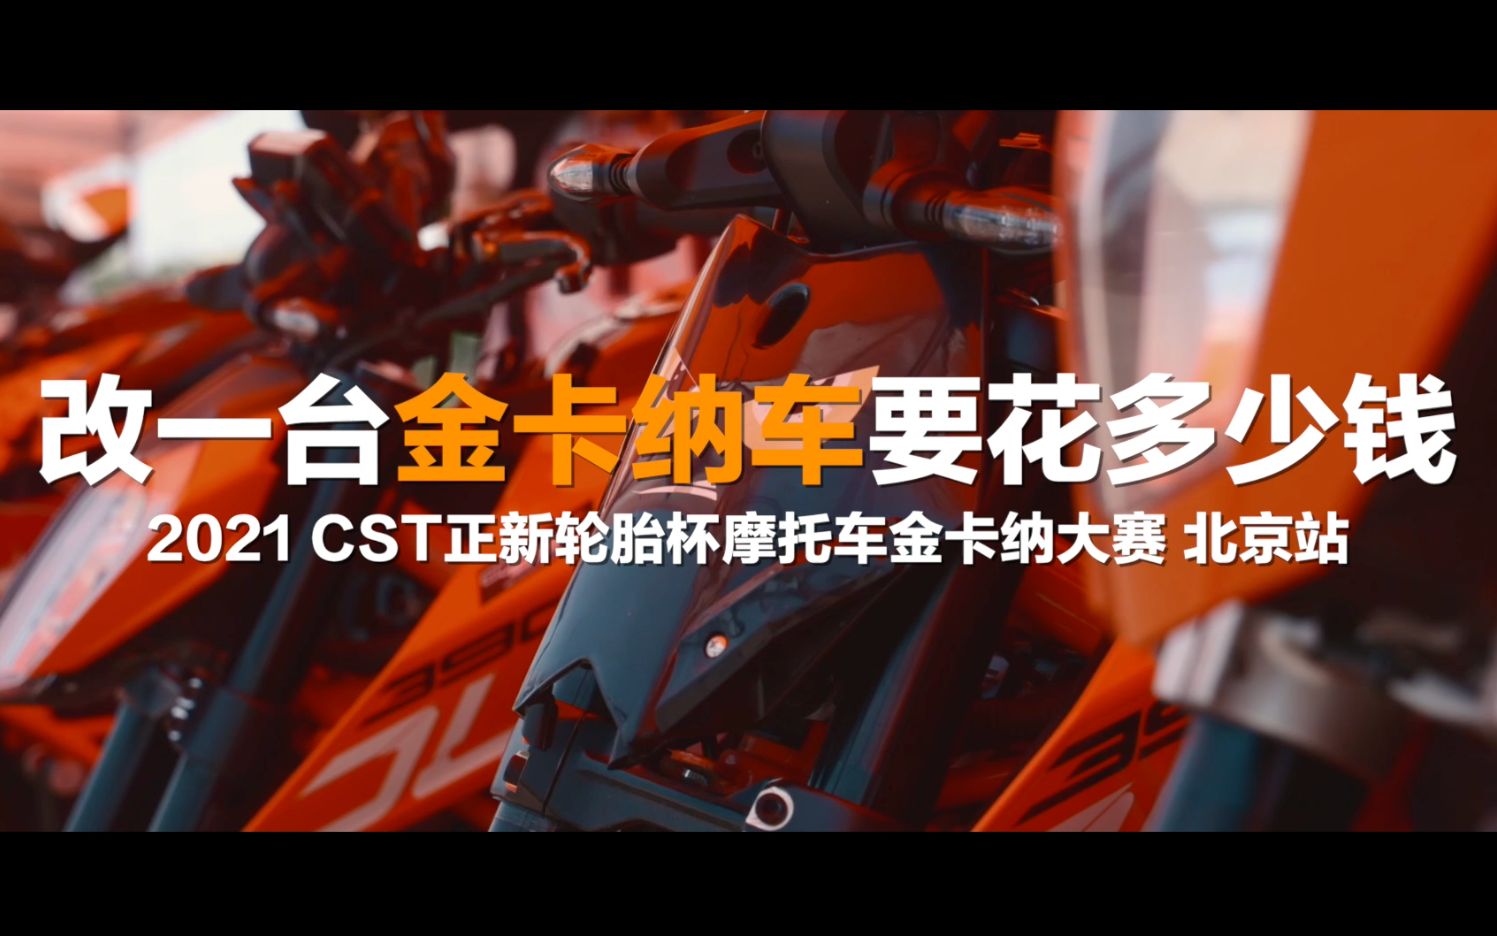 
“CST正新轮胎杯”摩托车金卡纳大赛无锡站赛事花絮